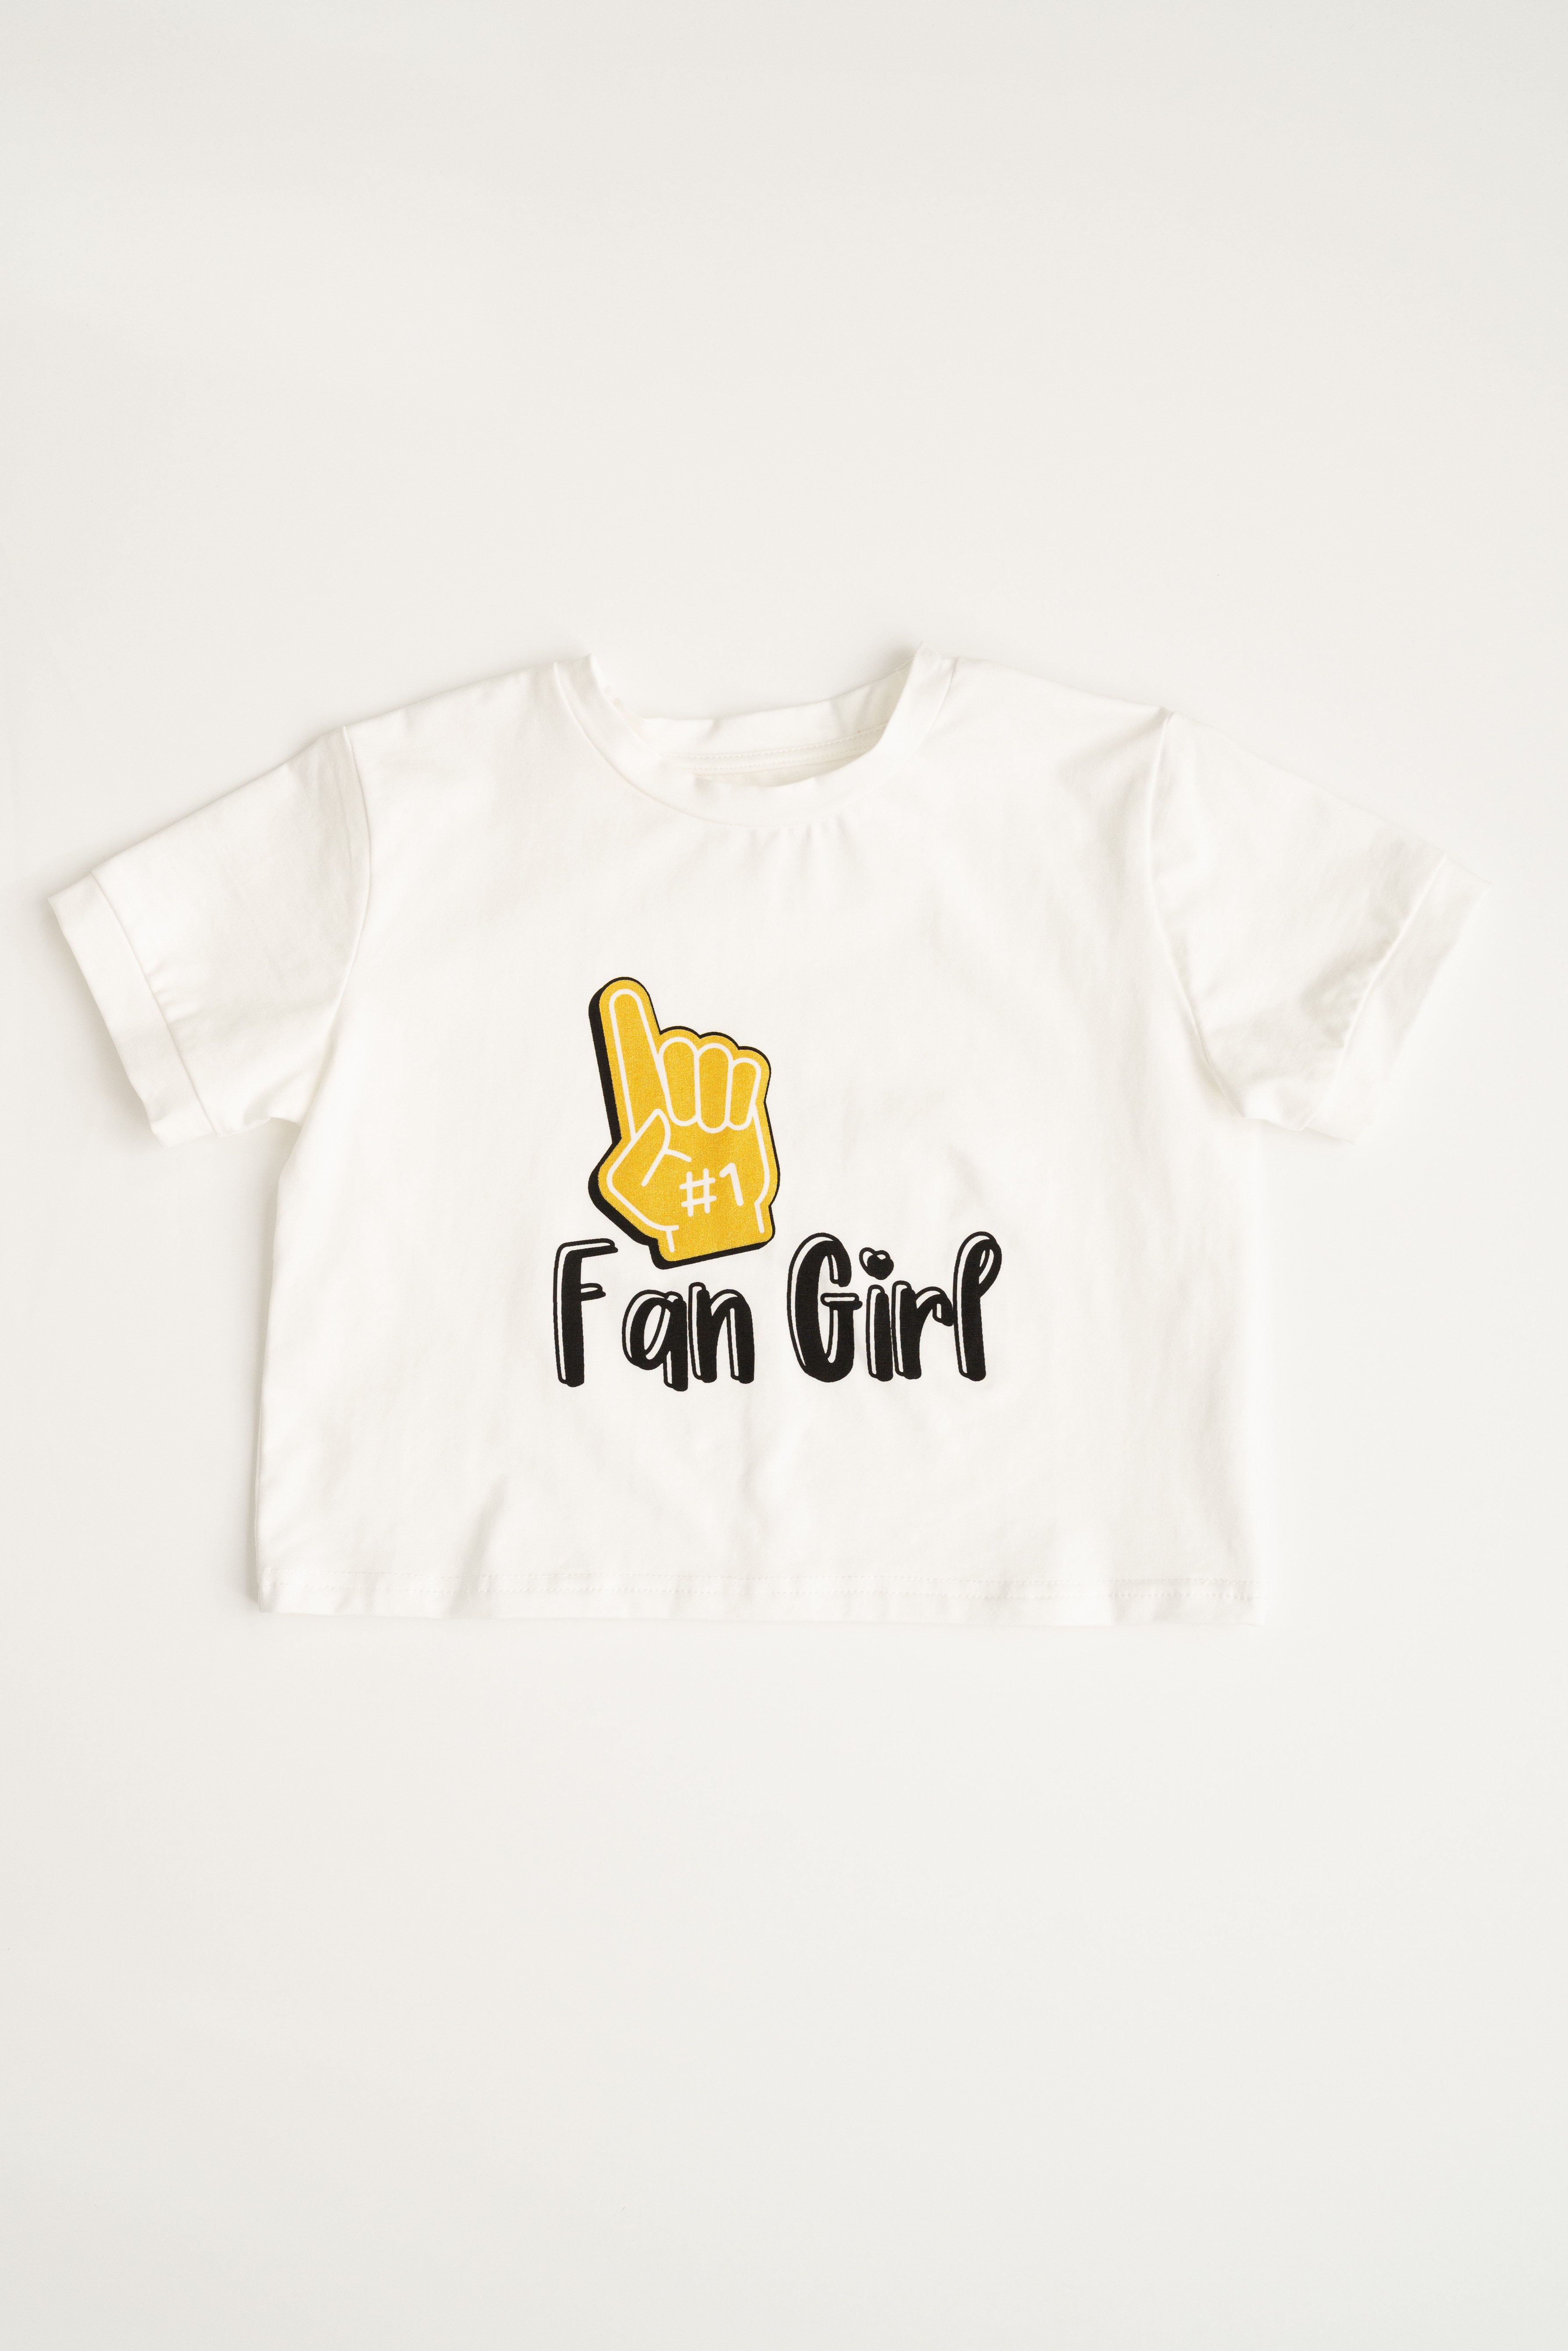 Fan Girl Black & Gold Shirt - Evie's Closet Clothing